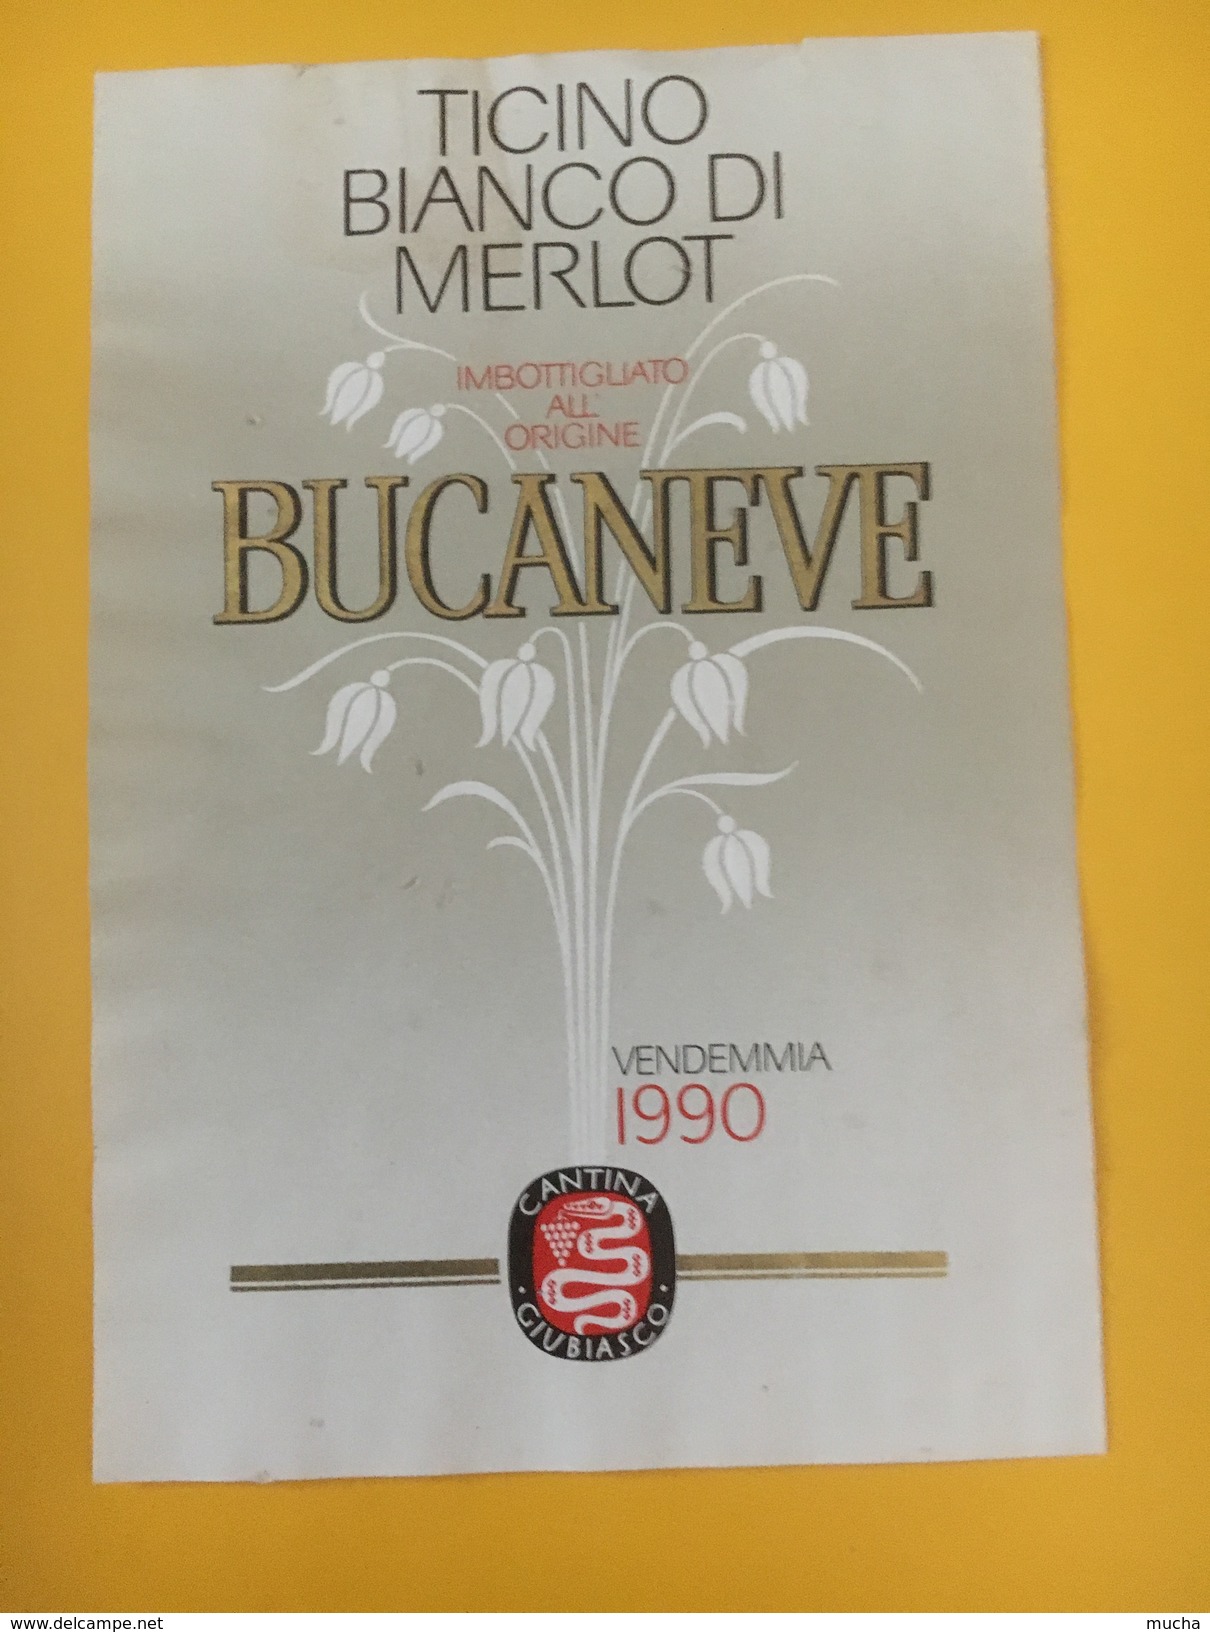 5541 - Bucaneve 1990 Bianco Di Merlot Ticino Suisse - Blumen